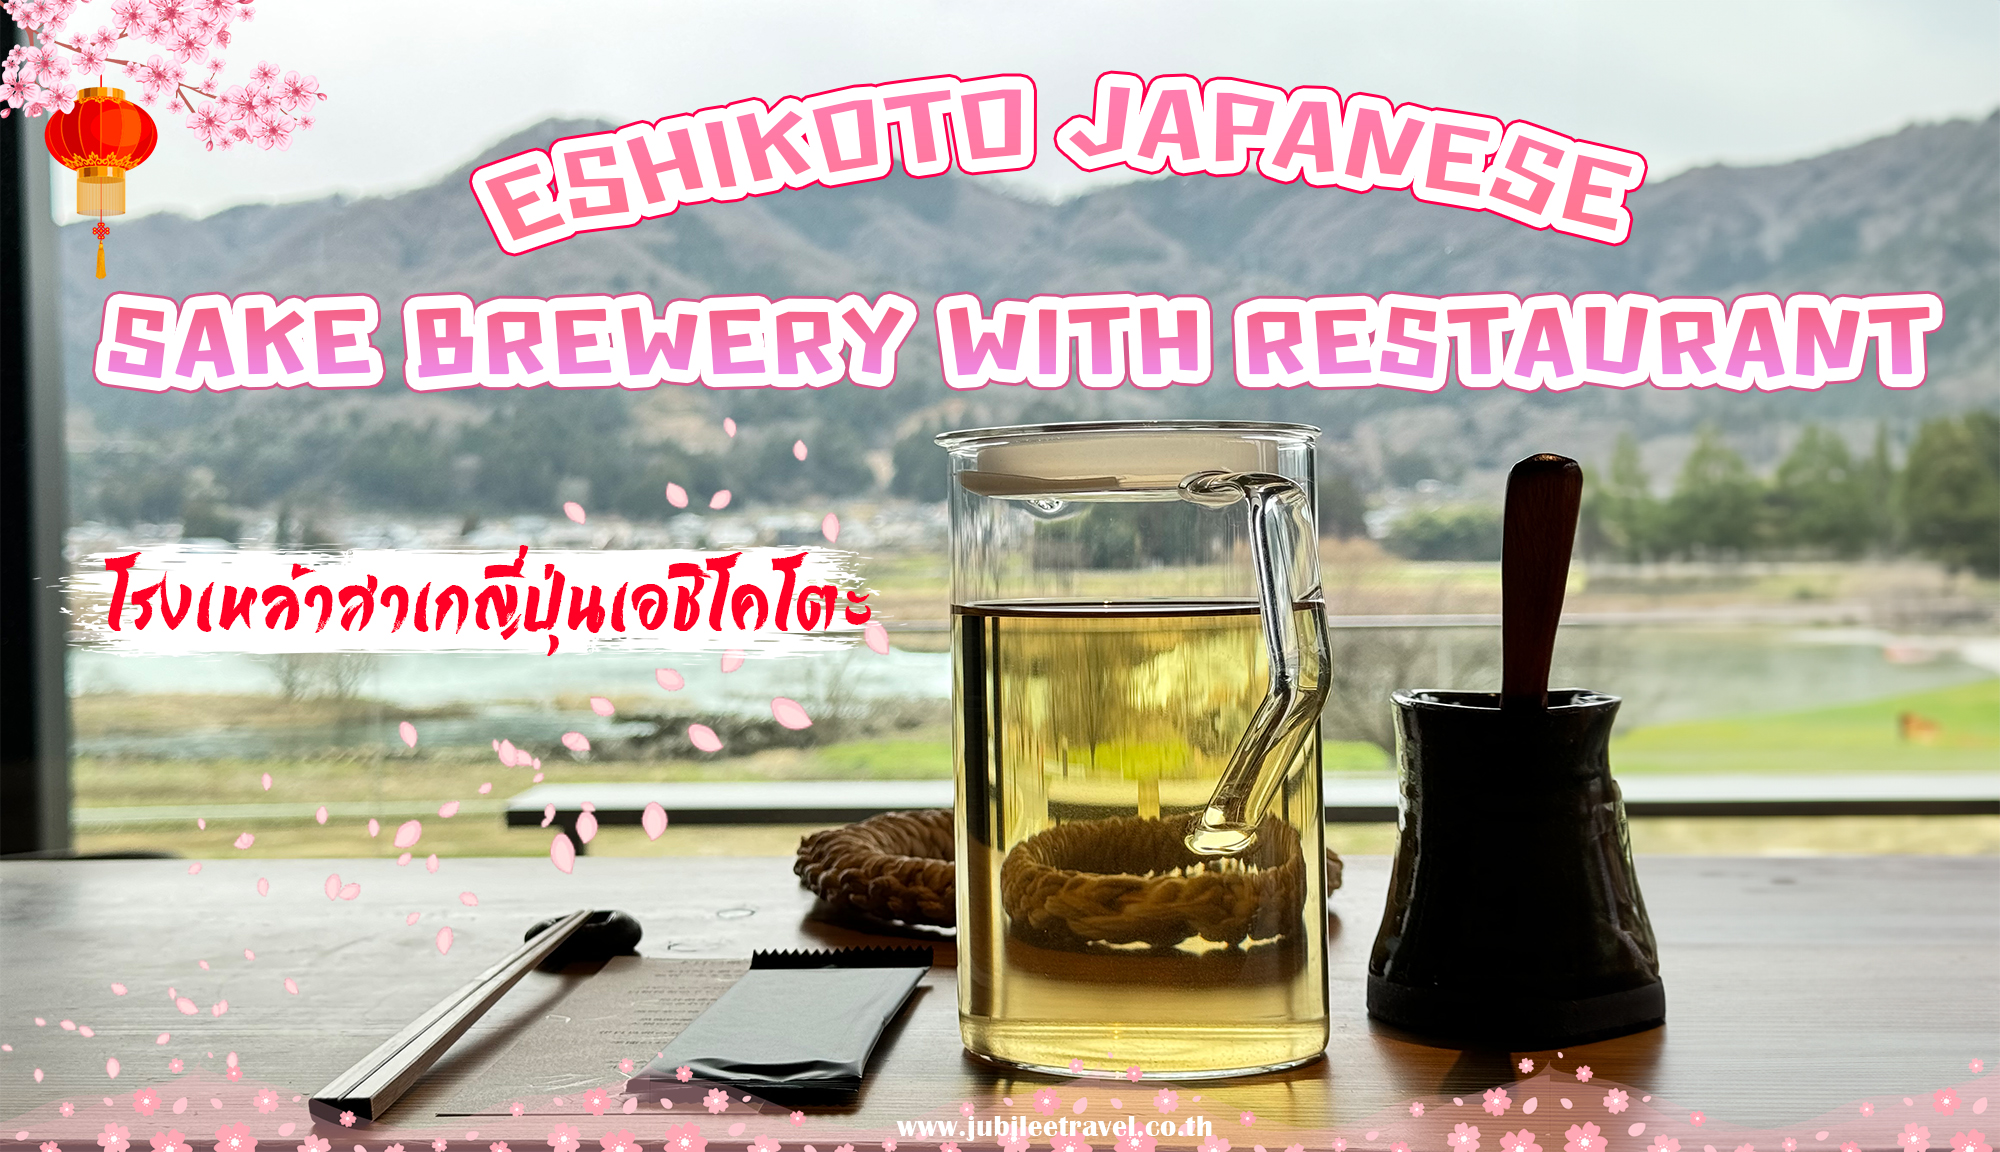 Trip Kansai : Eshikoto Japanese sake brewery with restaurant